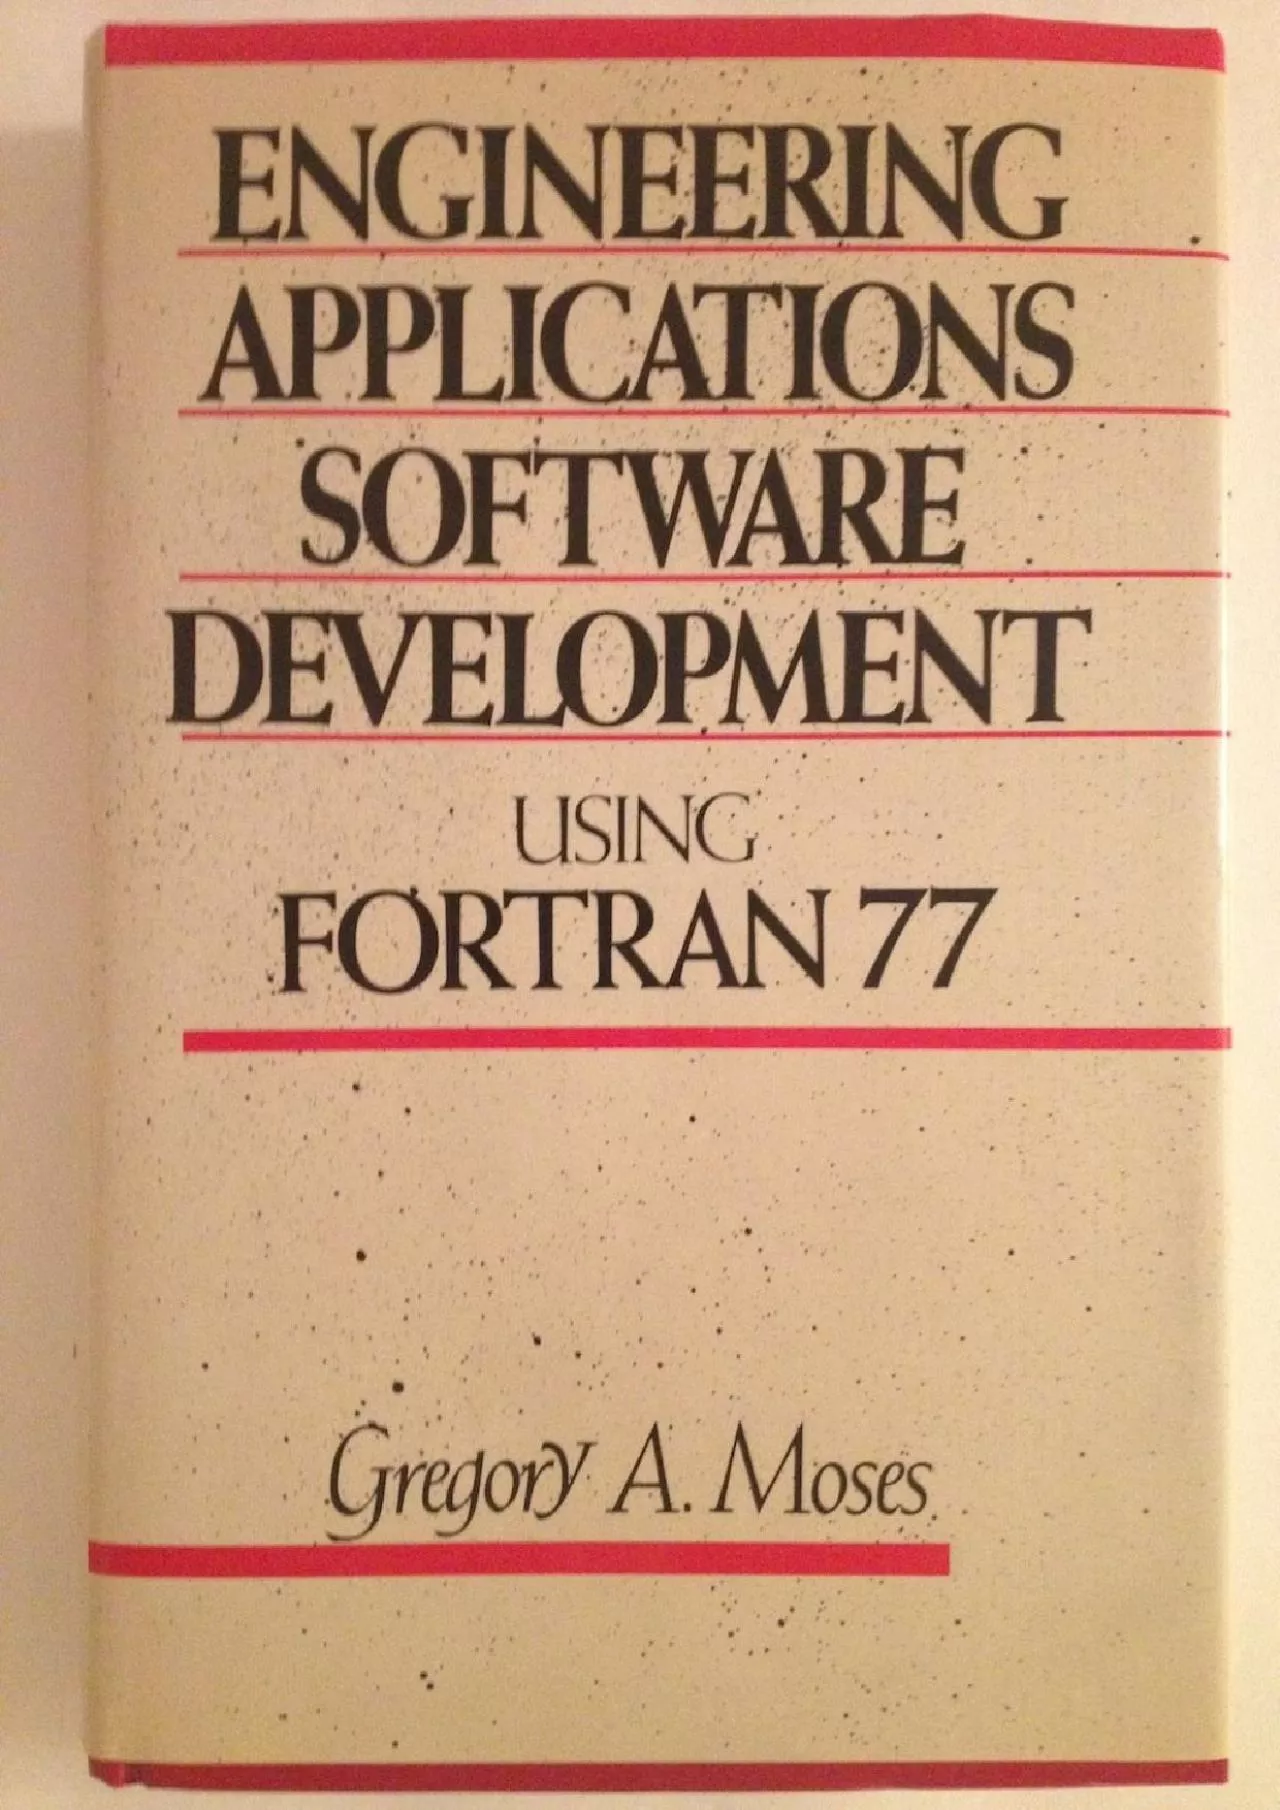 [FREE]-Engineering Applications Software Development: Using Fortran 77